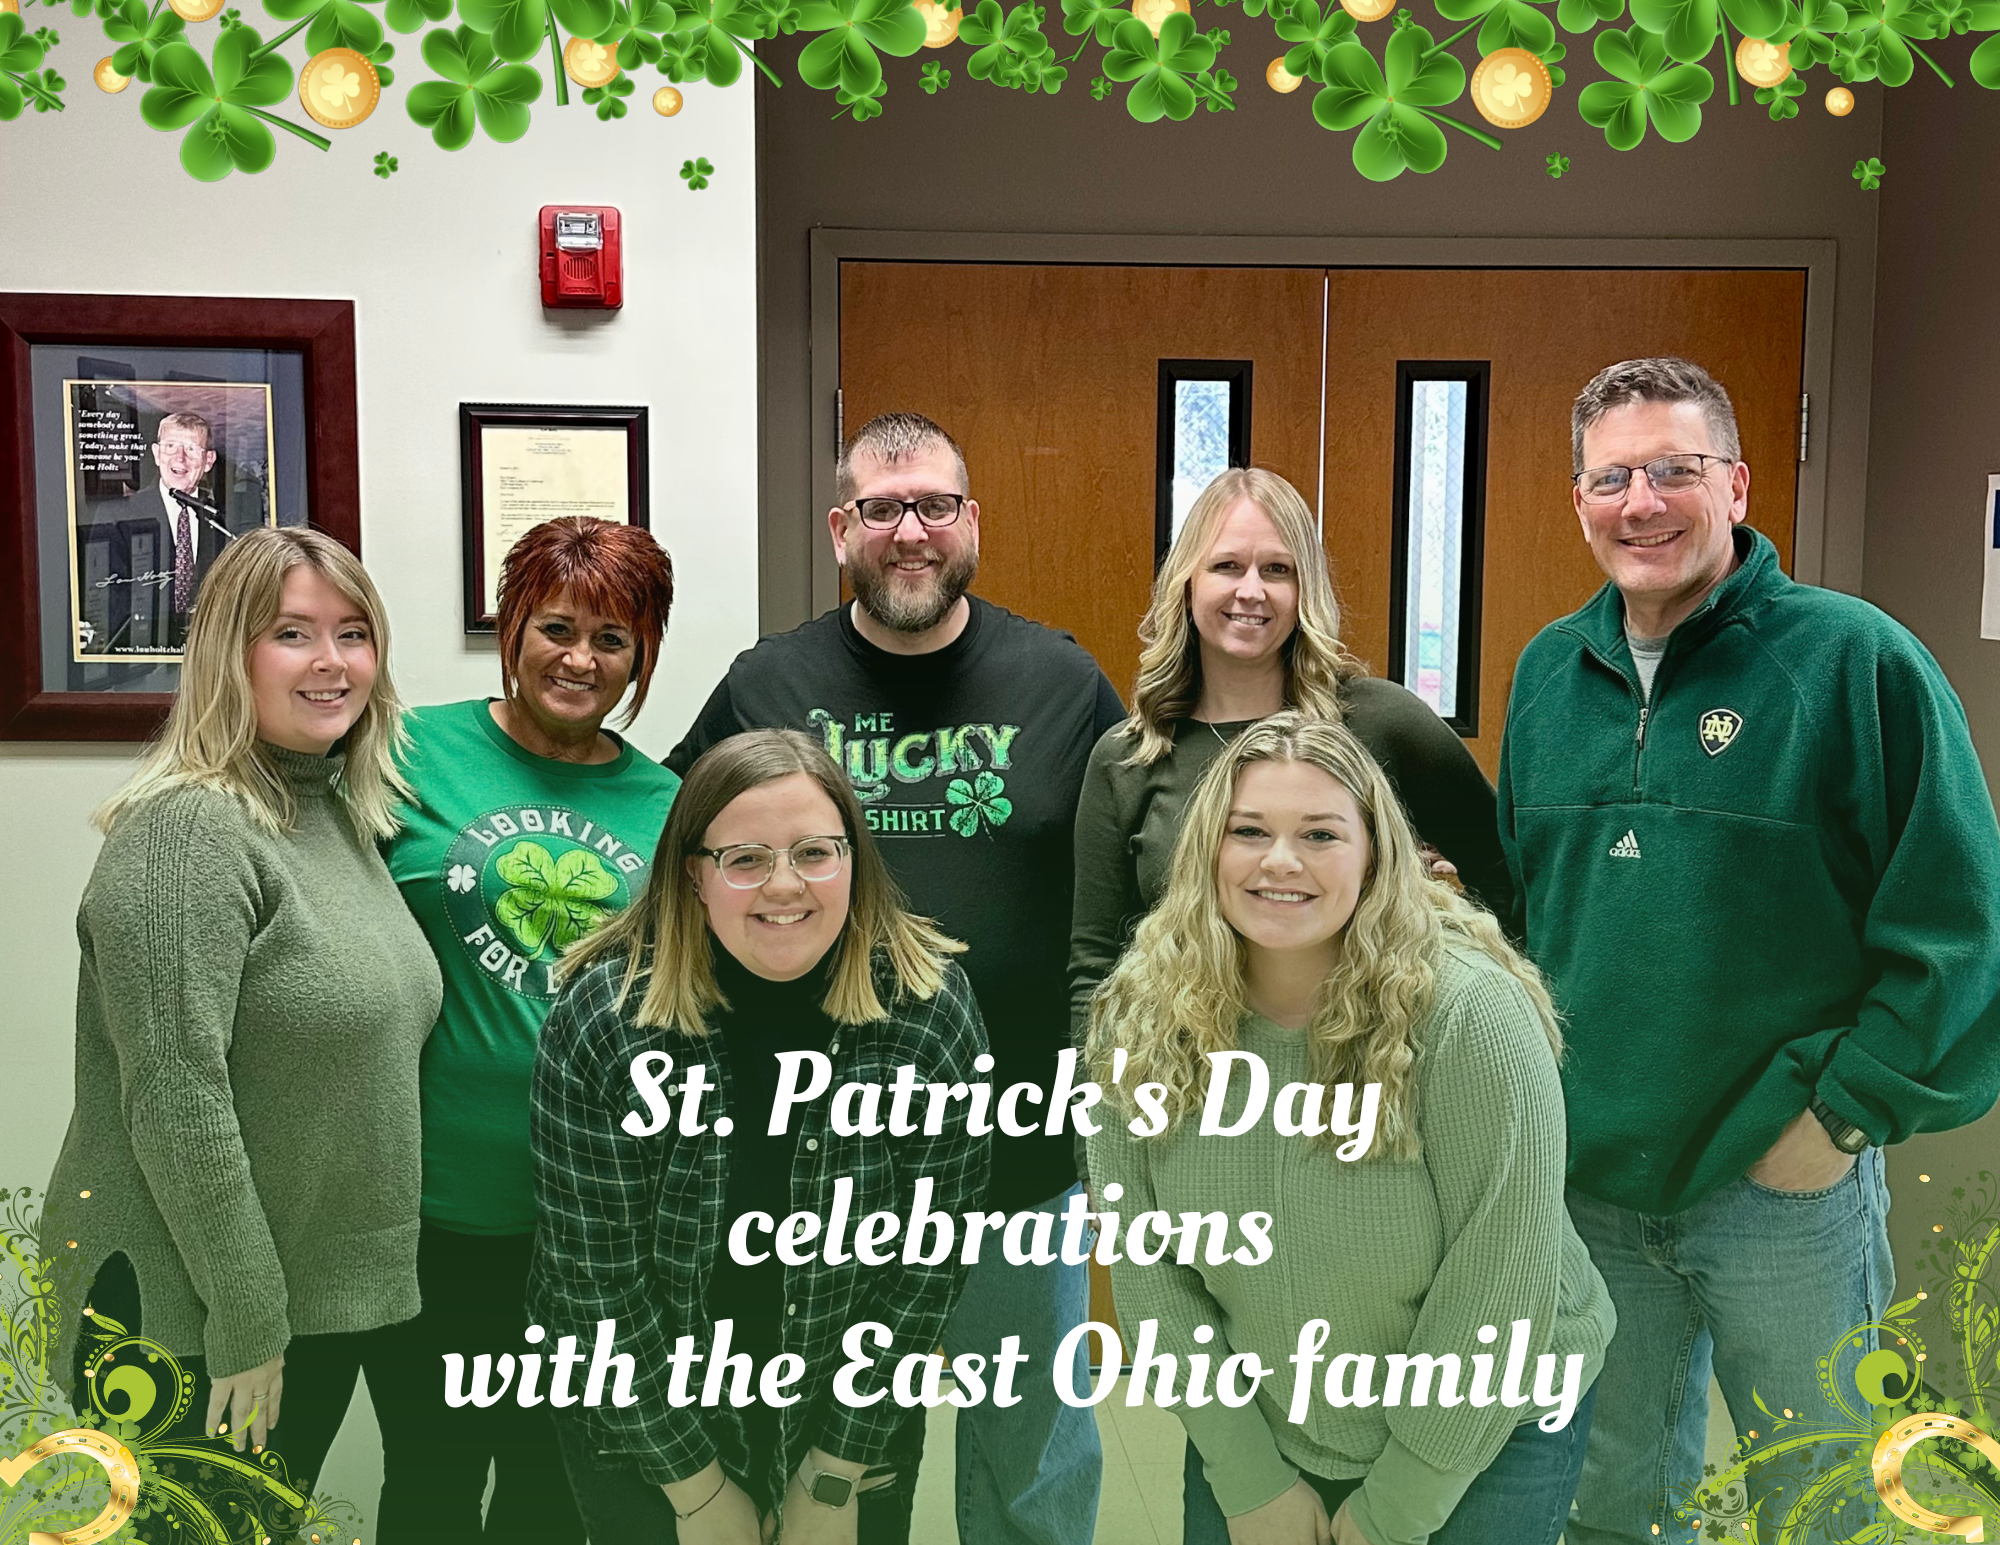 East Ohio's St. Patrick's Day Celebration